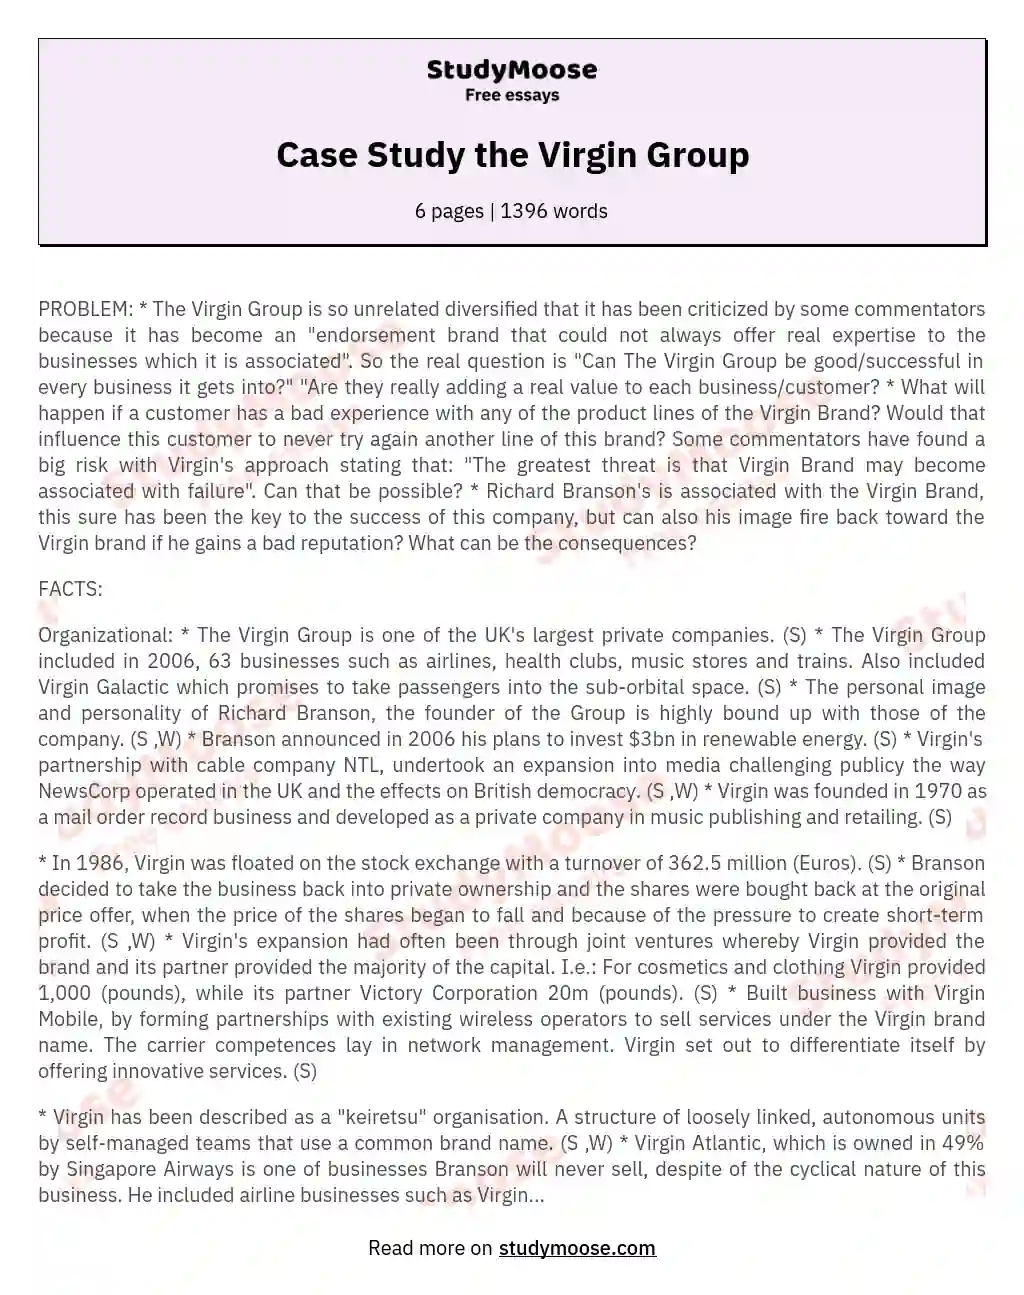 Case Study the Virgin Group